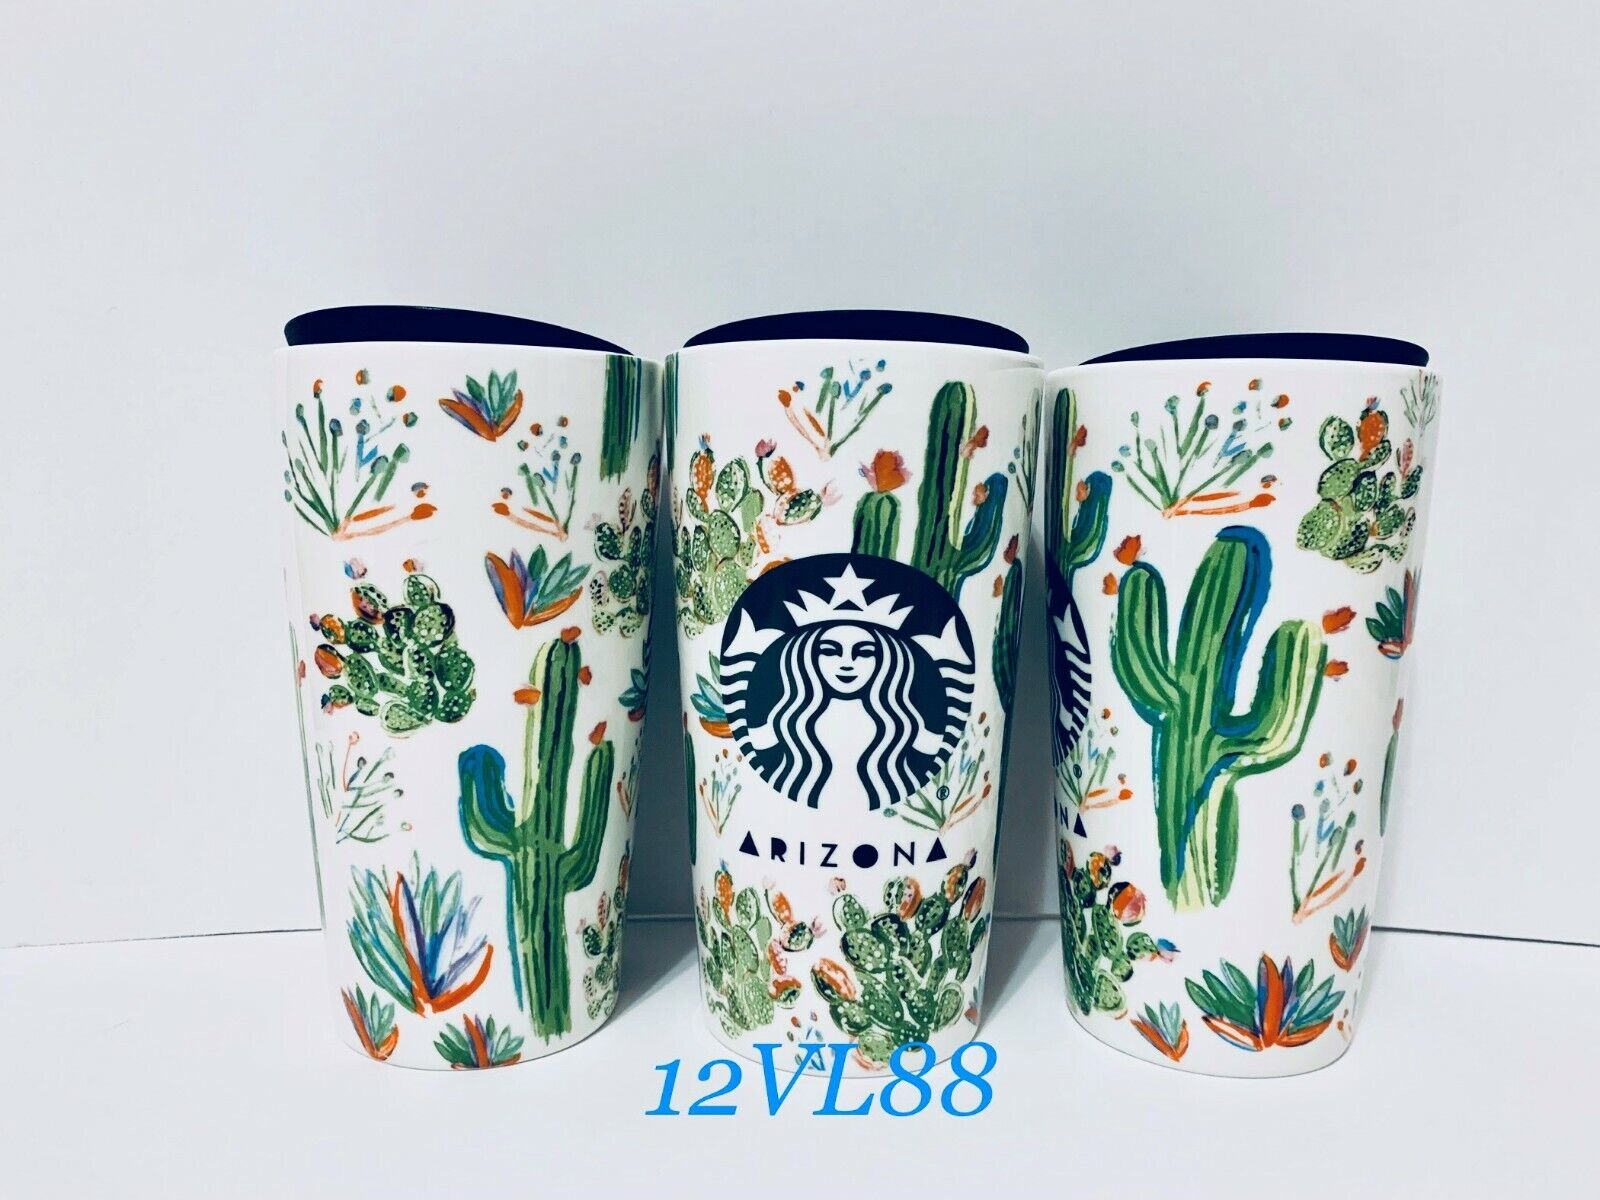 BRAND NEW & UNUSED - Starbucks - Arizona - Cactus - Ceramic Travel Tumbler Mug